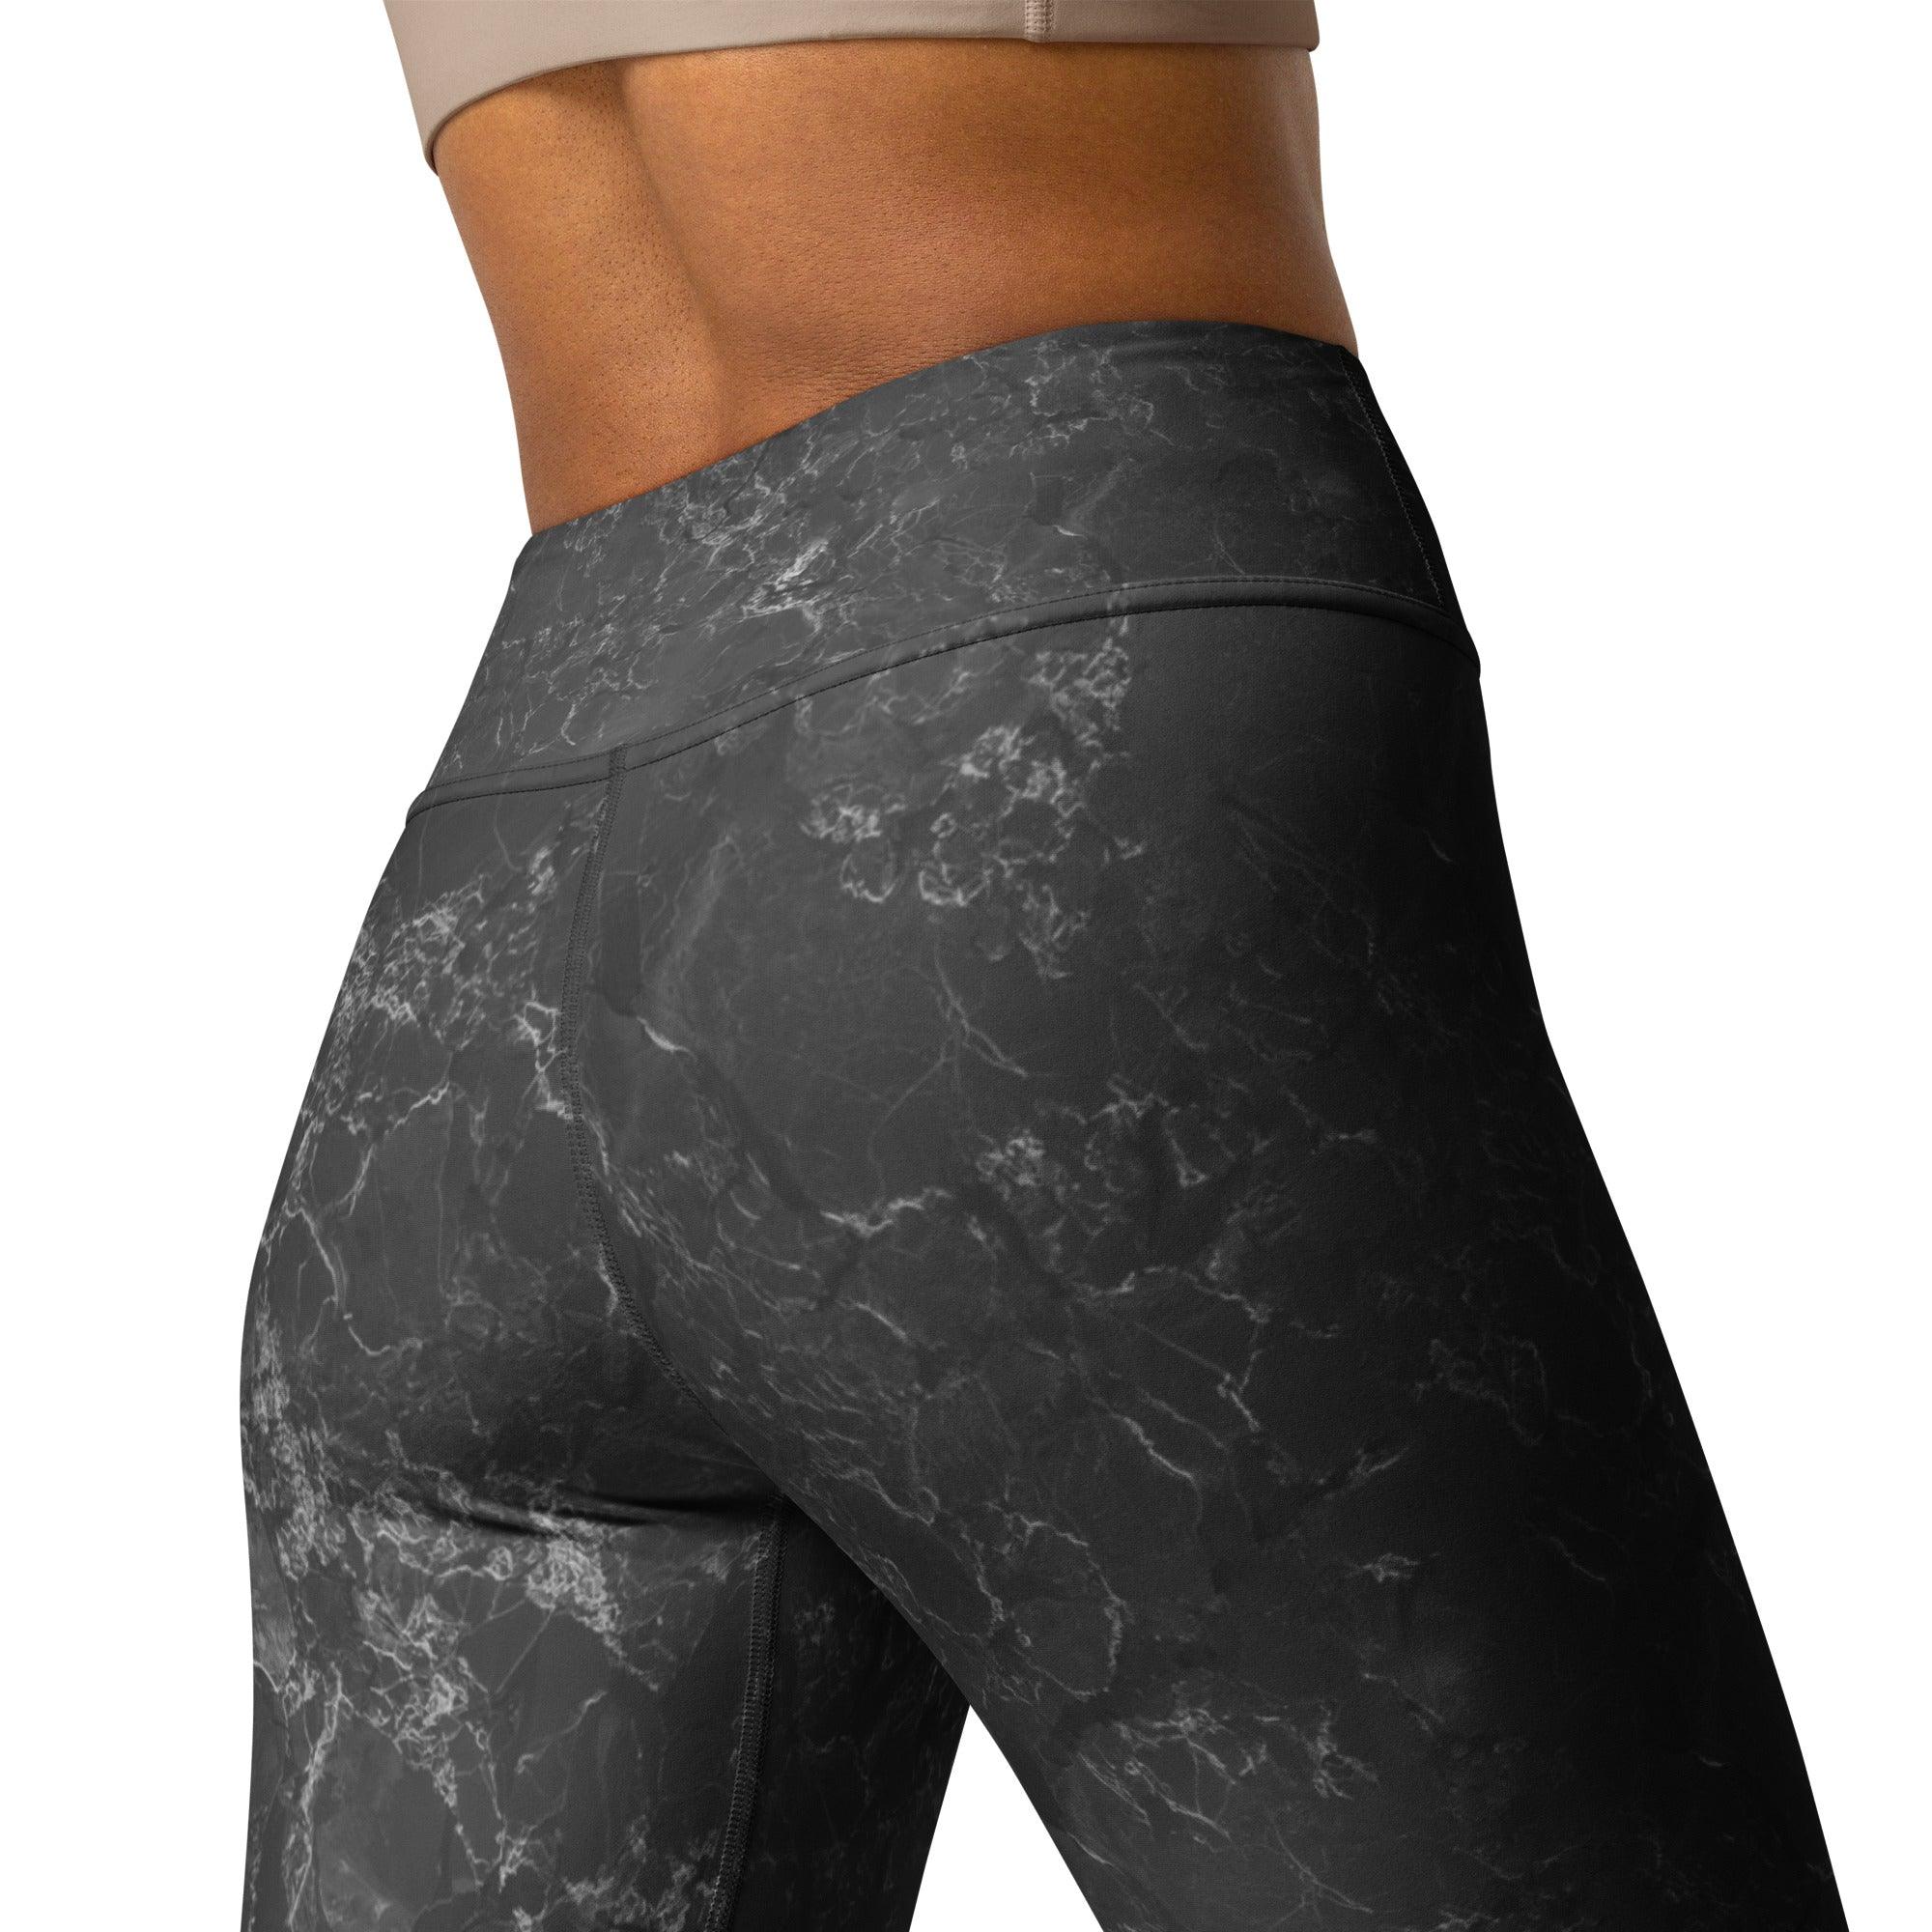 Stylish grey leggings for fitness enthusiasts.